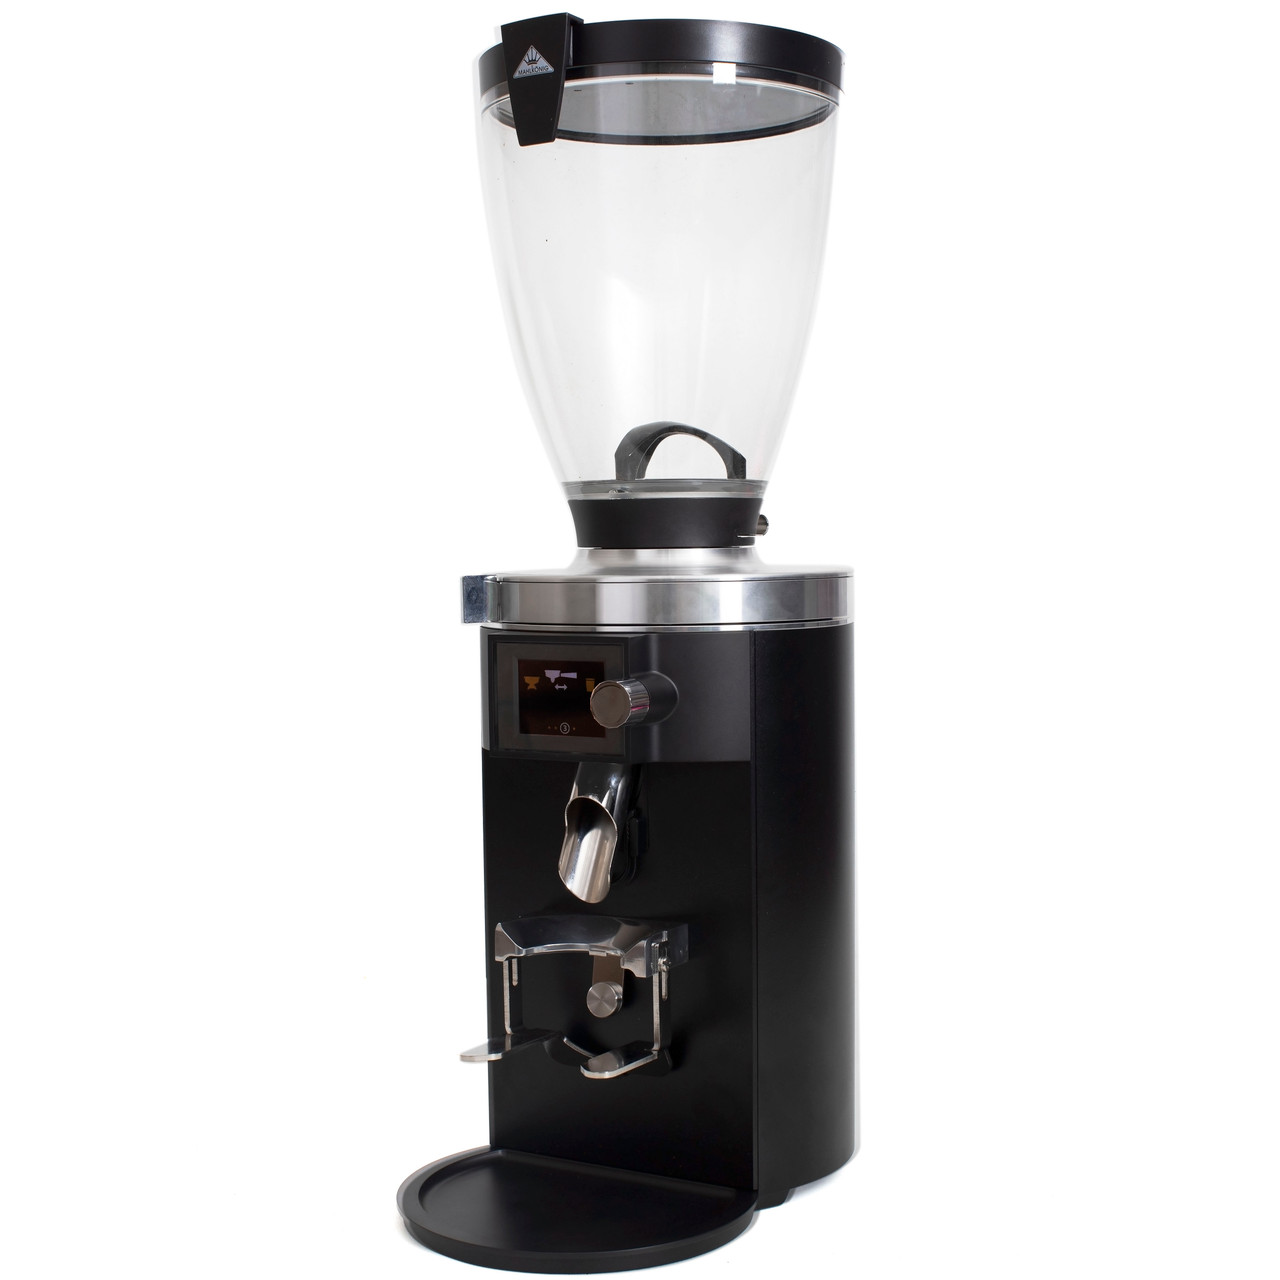 2023 Espresso Grinder Market Comparison - Prima Coffee Equipment